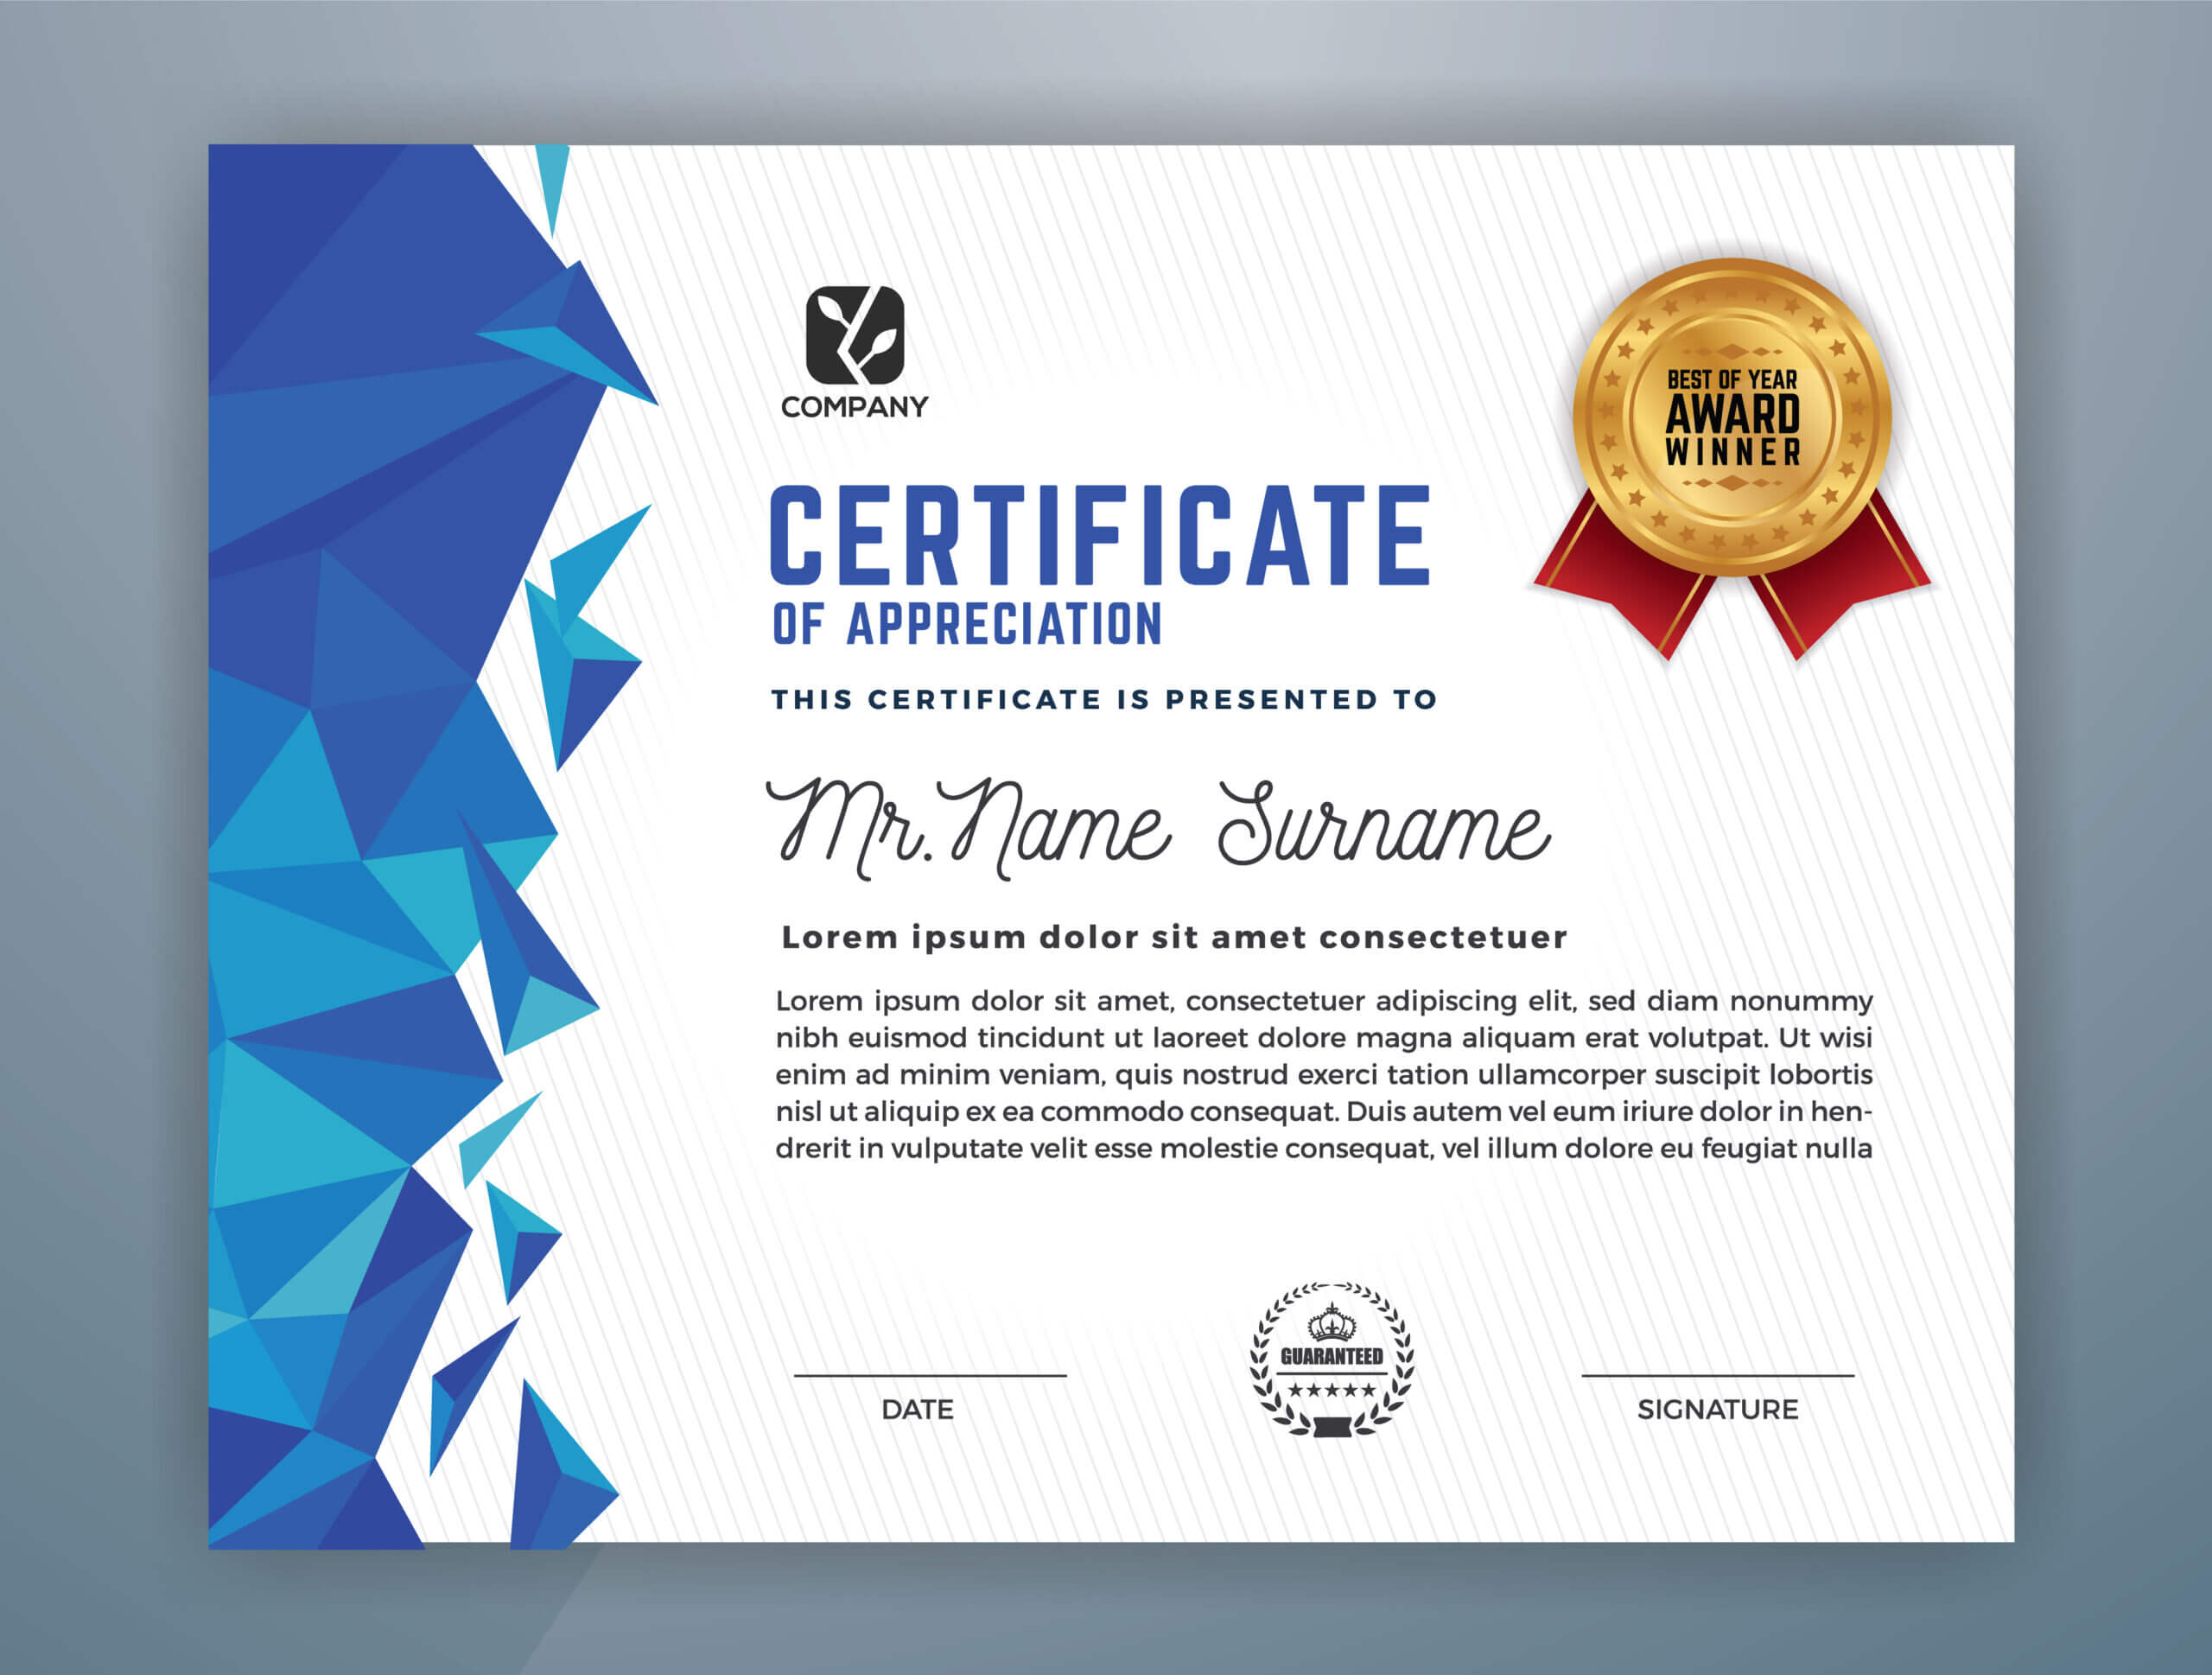 Multipurpose Professional Certificate Template Design Within Design A Certificate Template